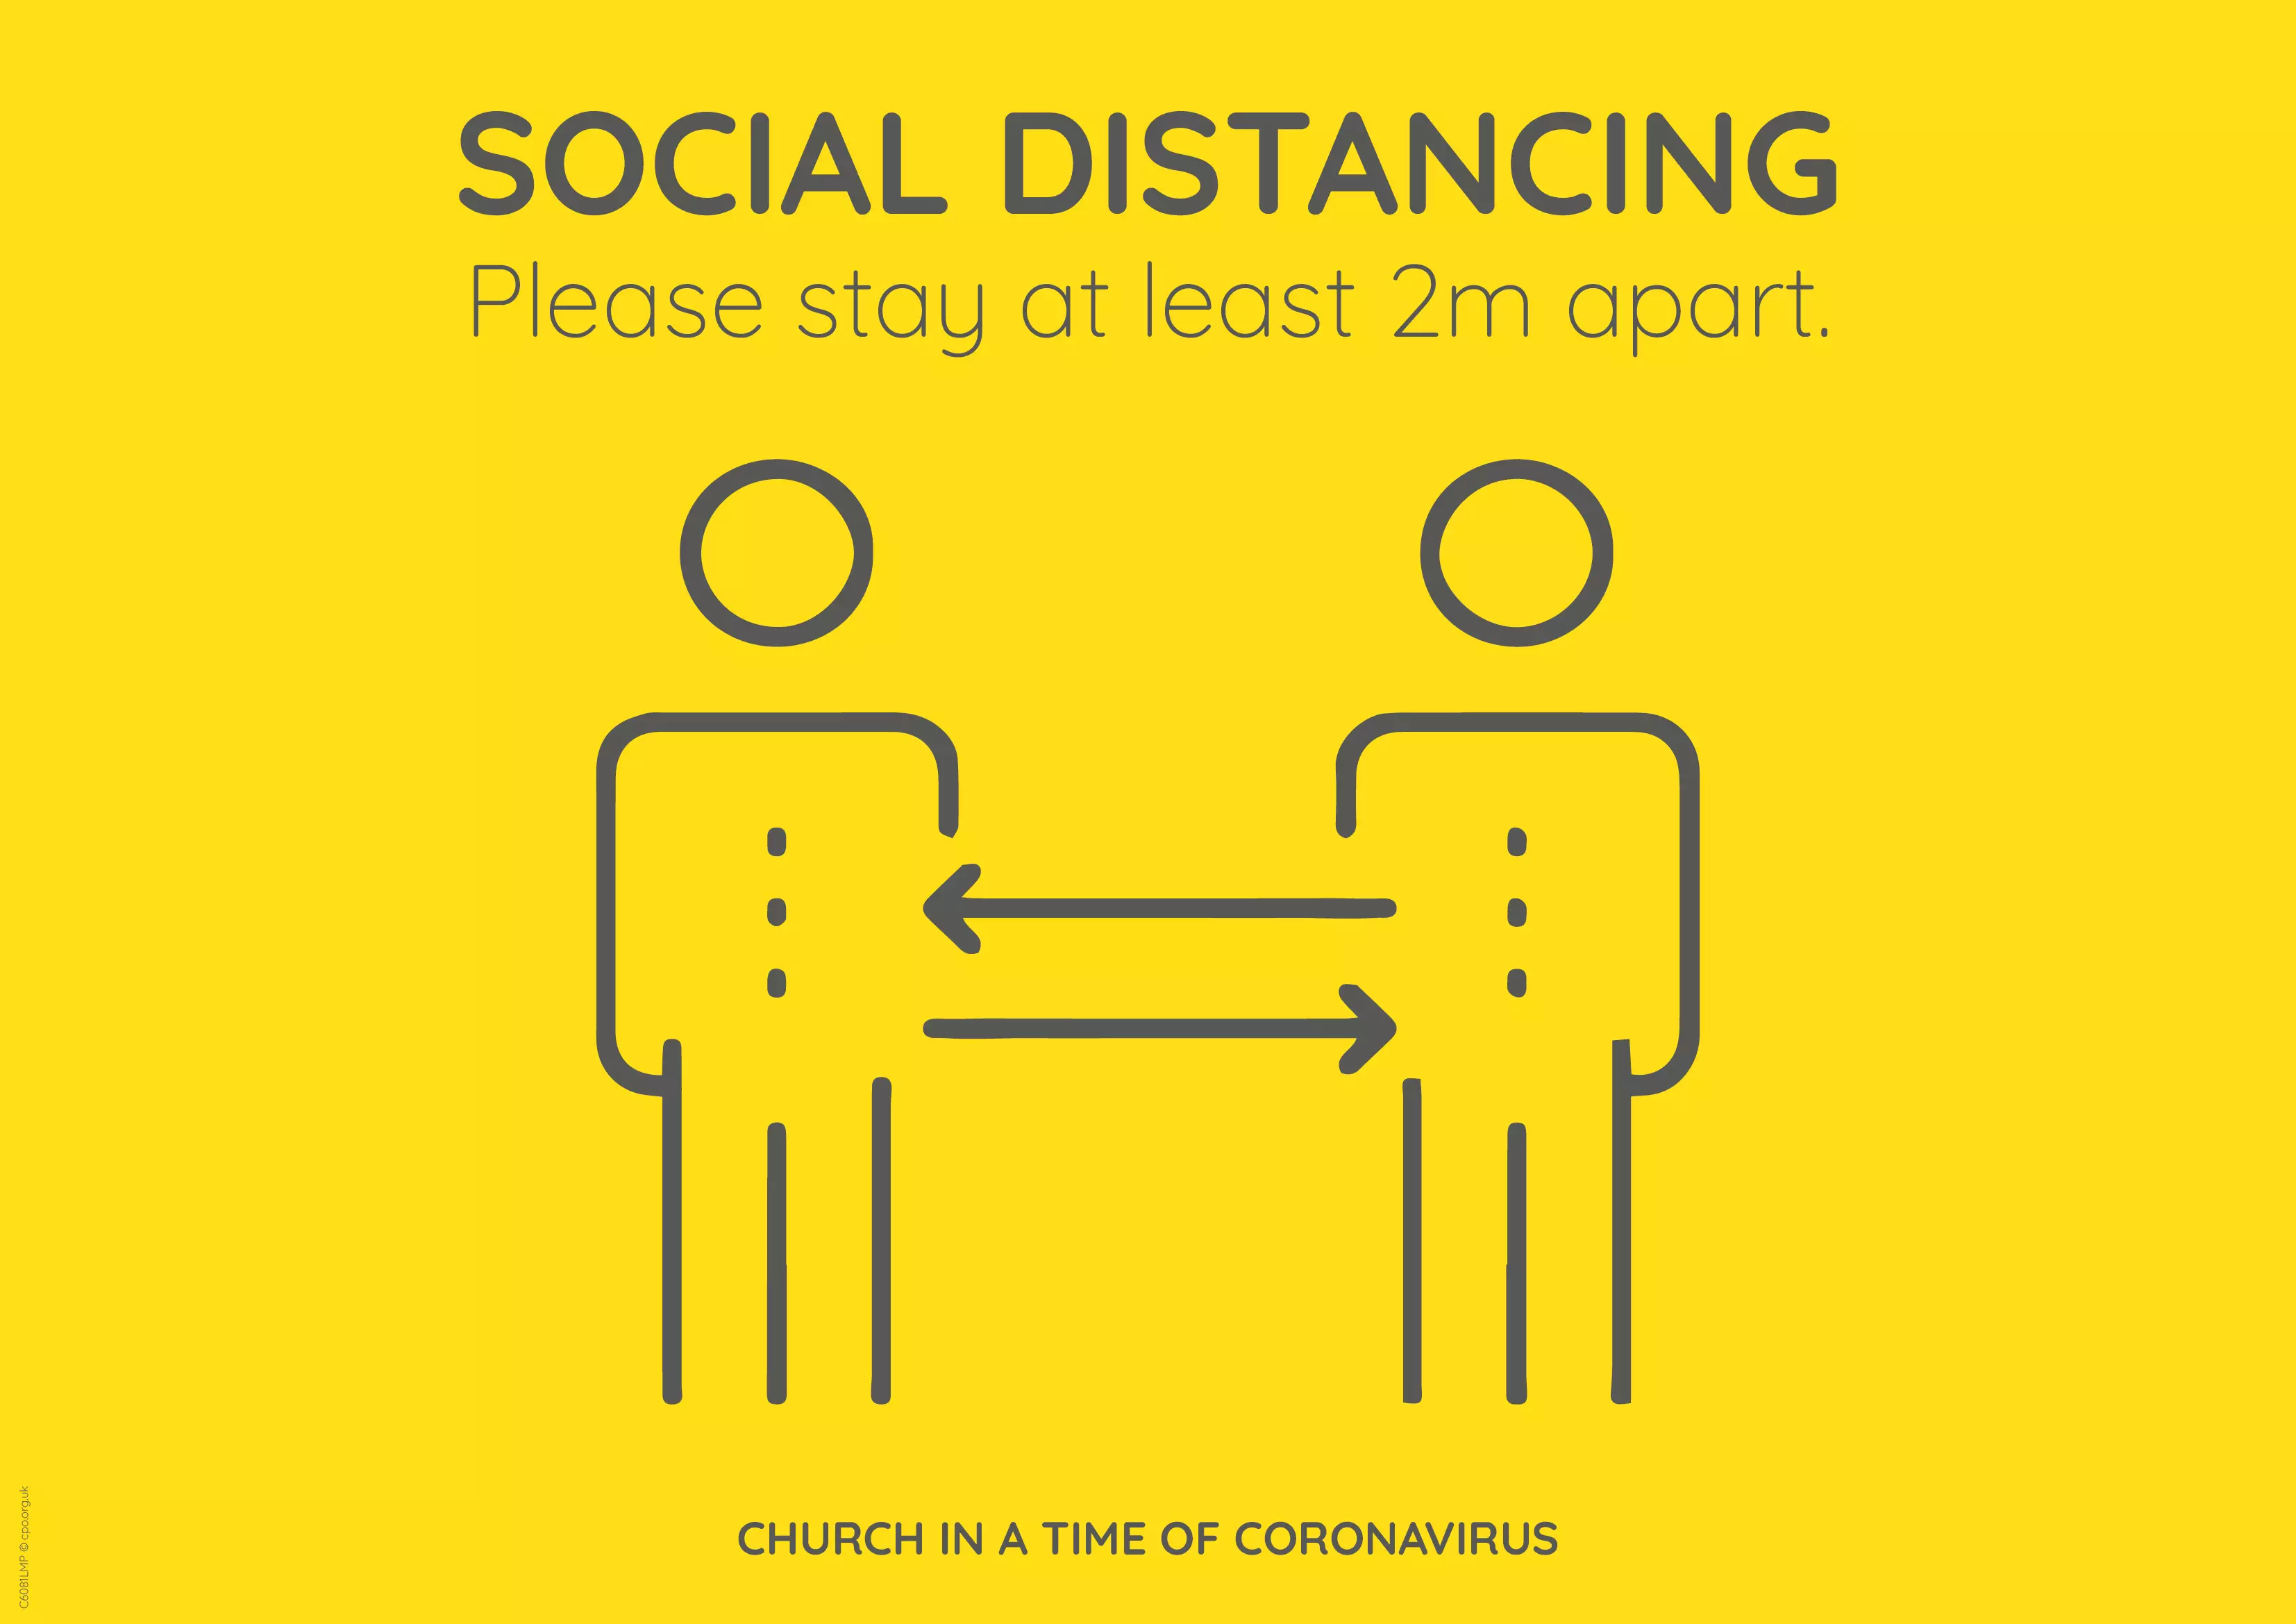 Social Distancing 2m (COVID-19)